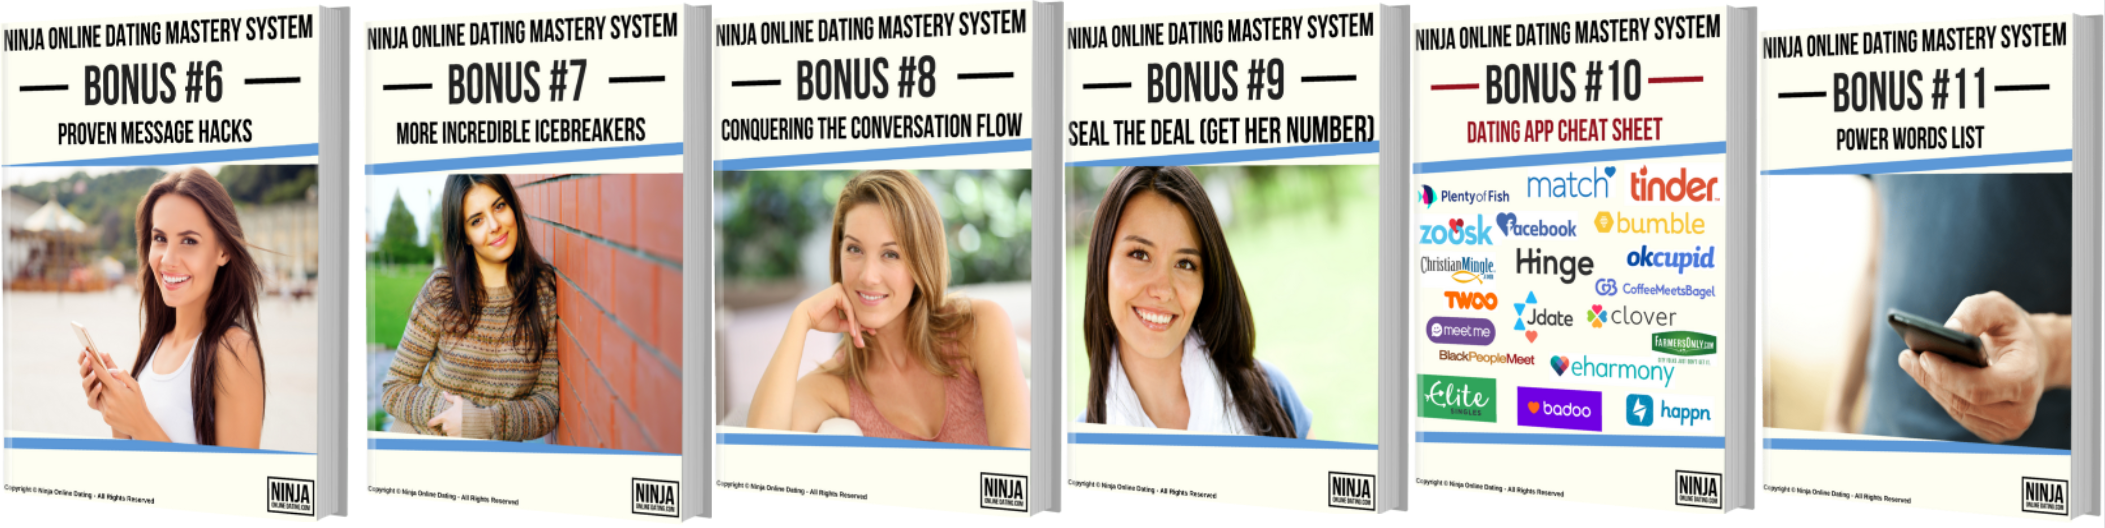 Online Dating Mastery System - Bonus Level 2